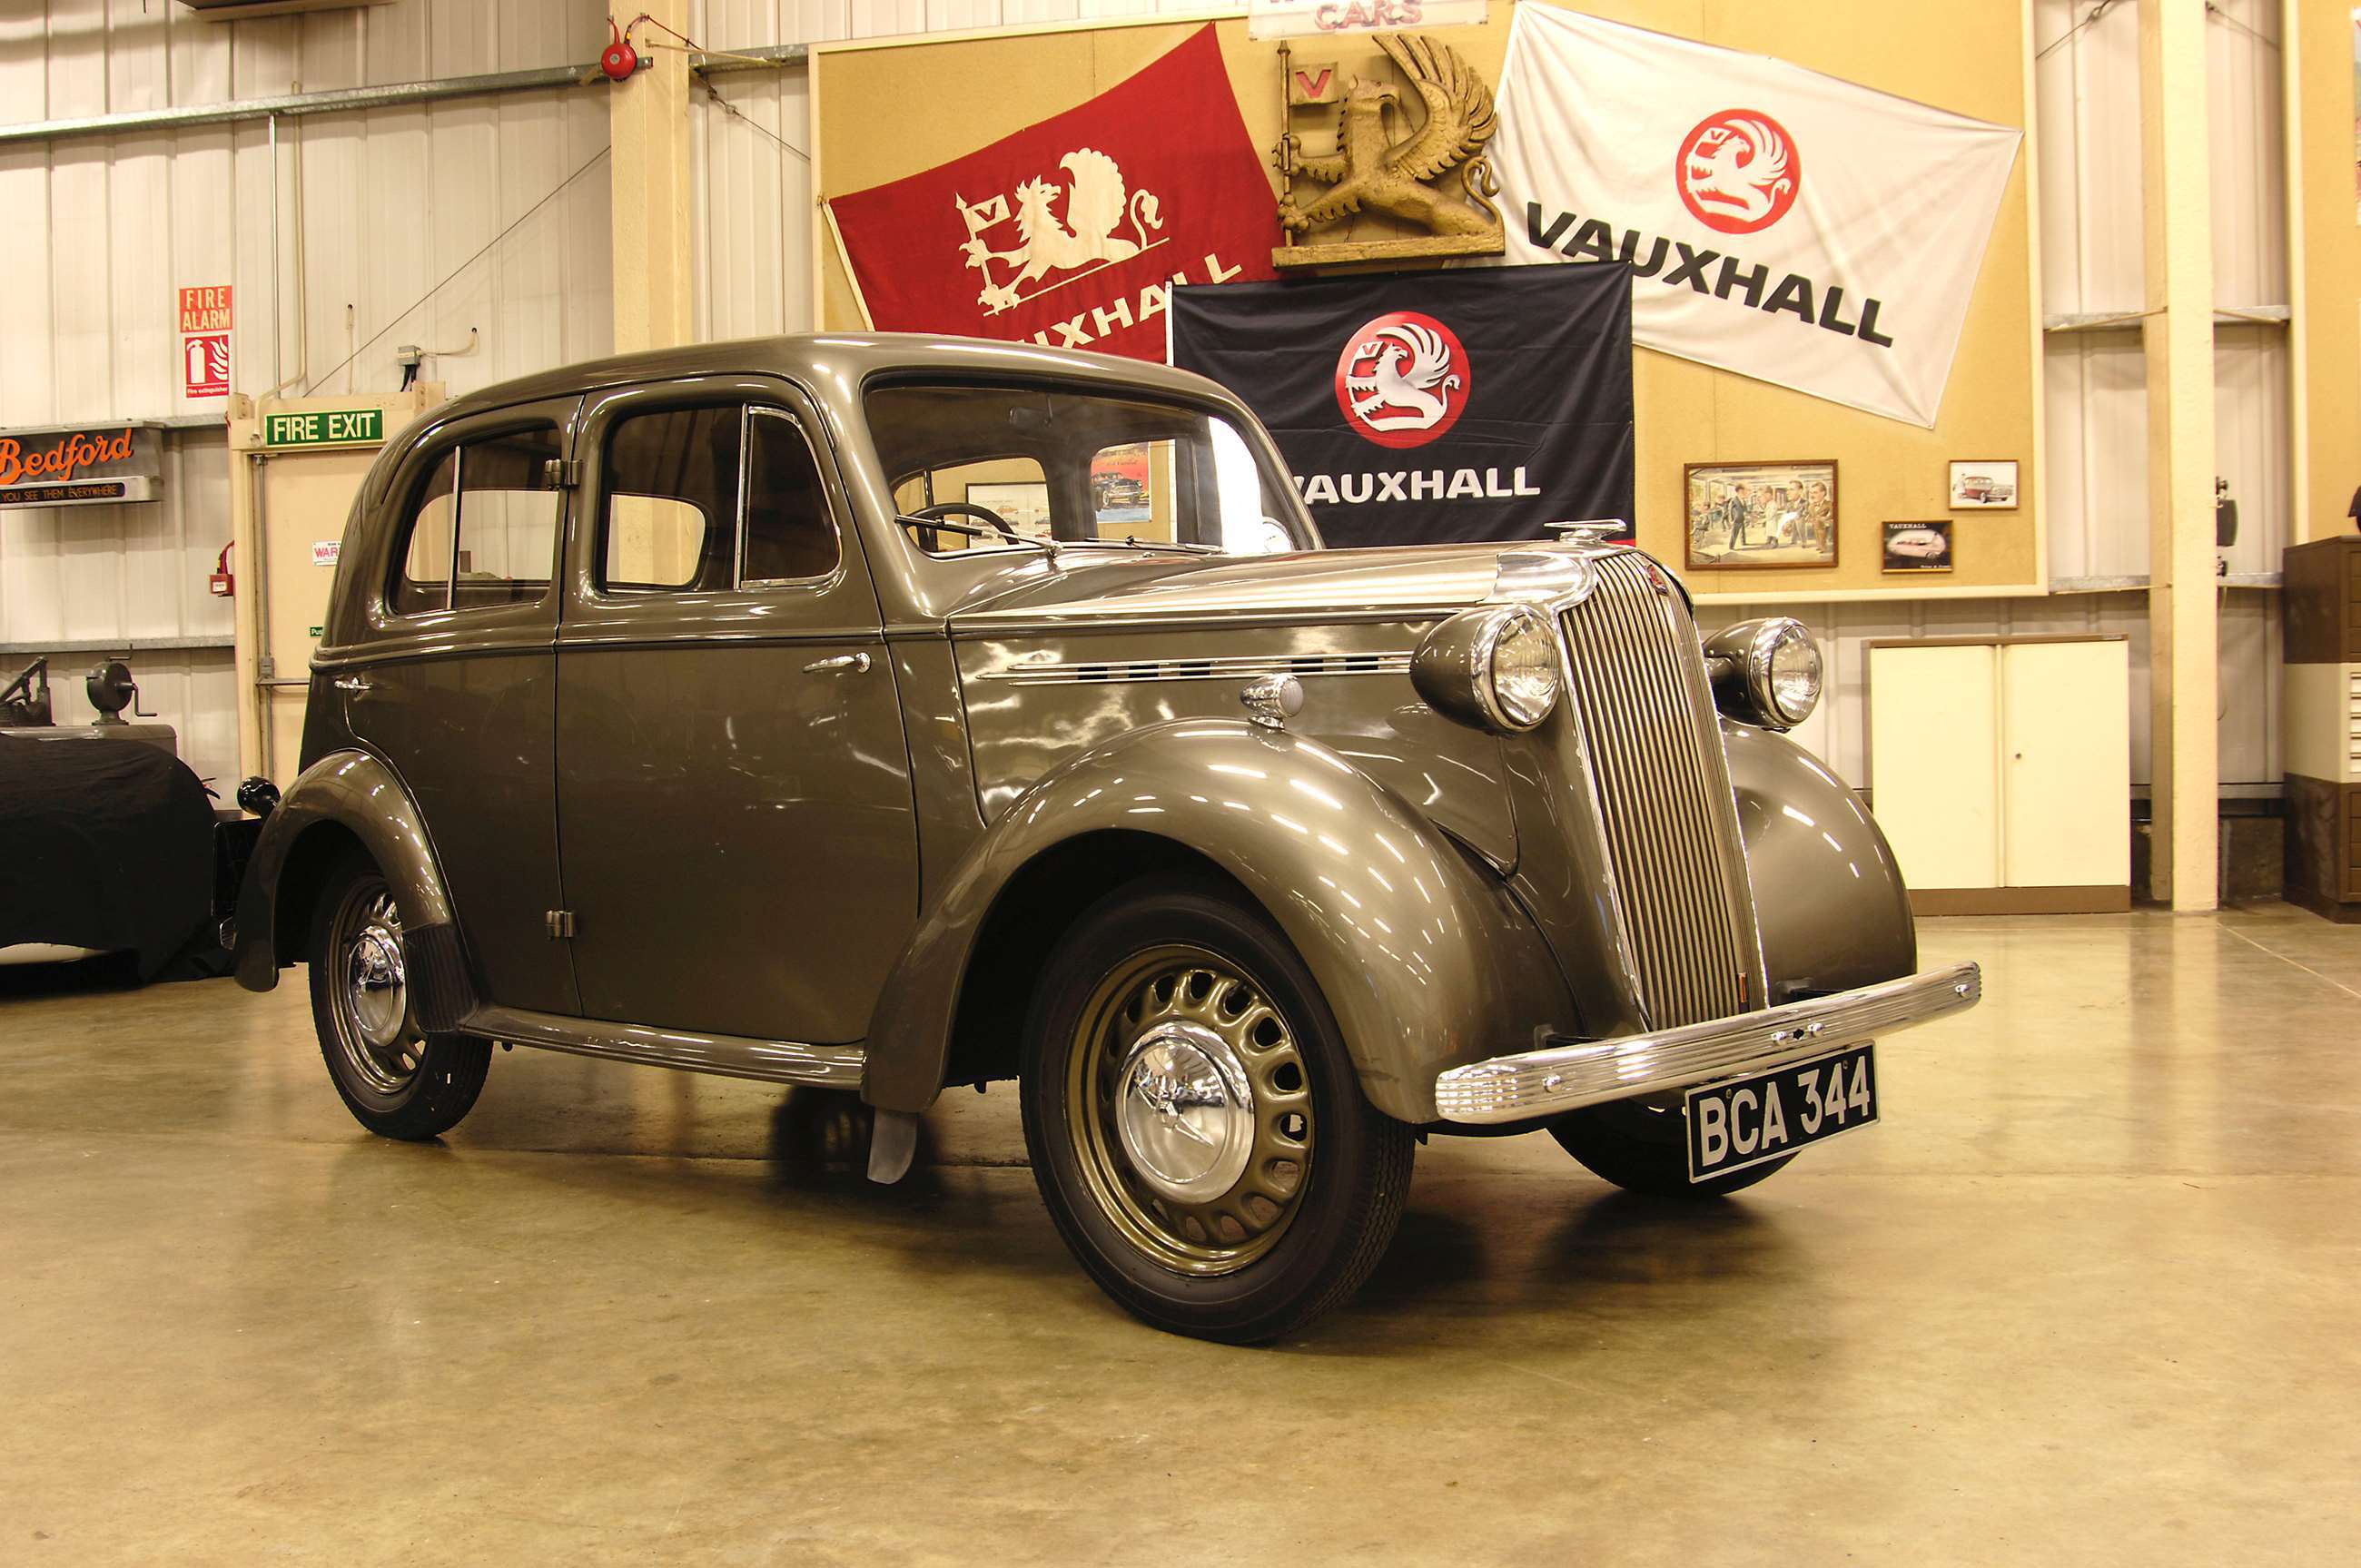 vauxhall-h-type-1937-vauxhall-heritage-goodwood-17042019.jpg